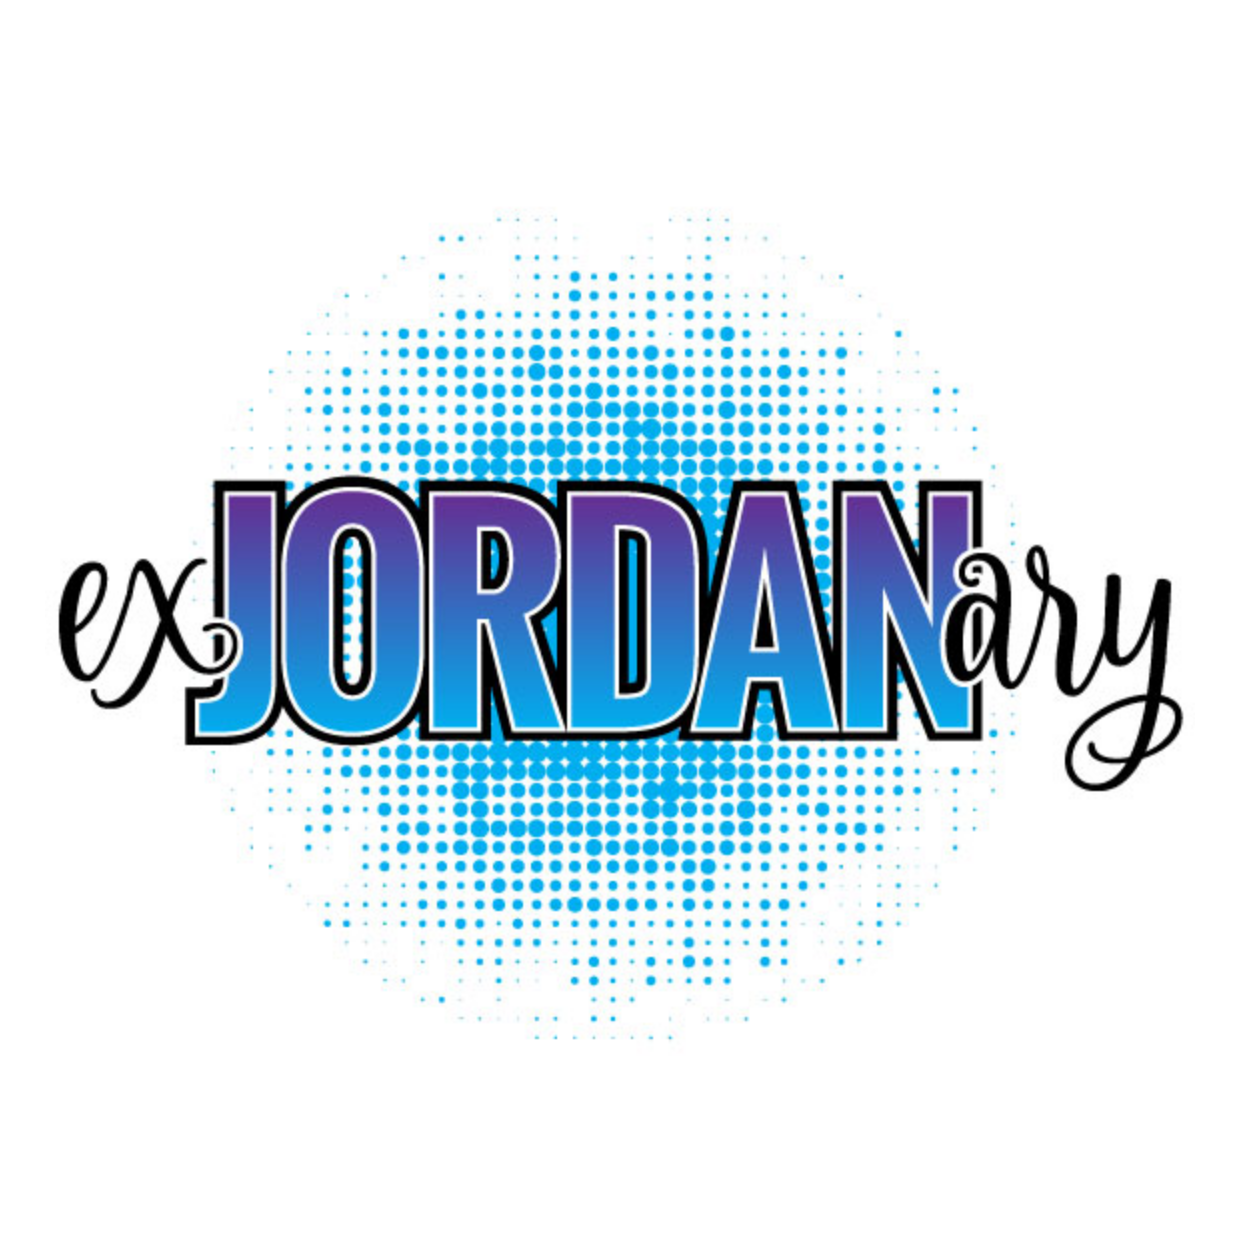 ex"Jordan"ary logo